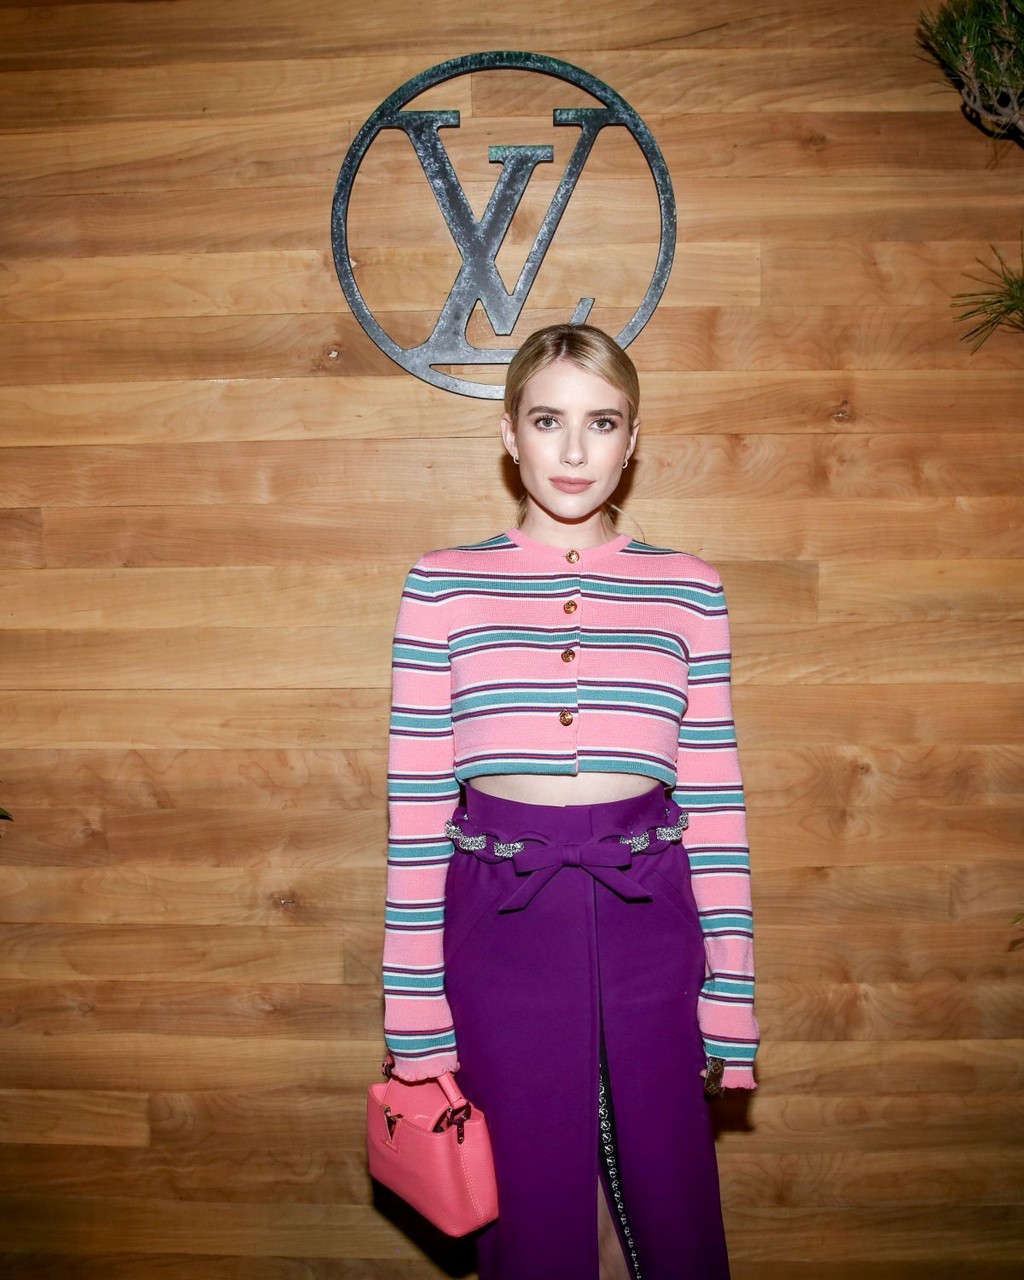 Emma Roberts Louis Vuitton Nicolas Ghesquiere Celebrate An Evening With Friends Malibu